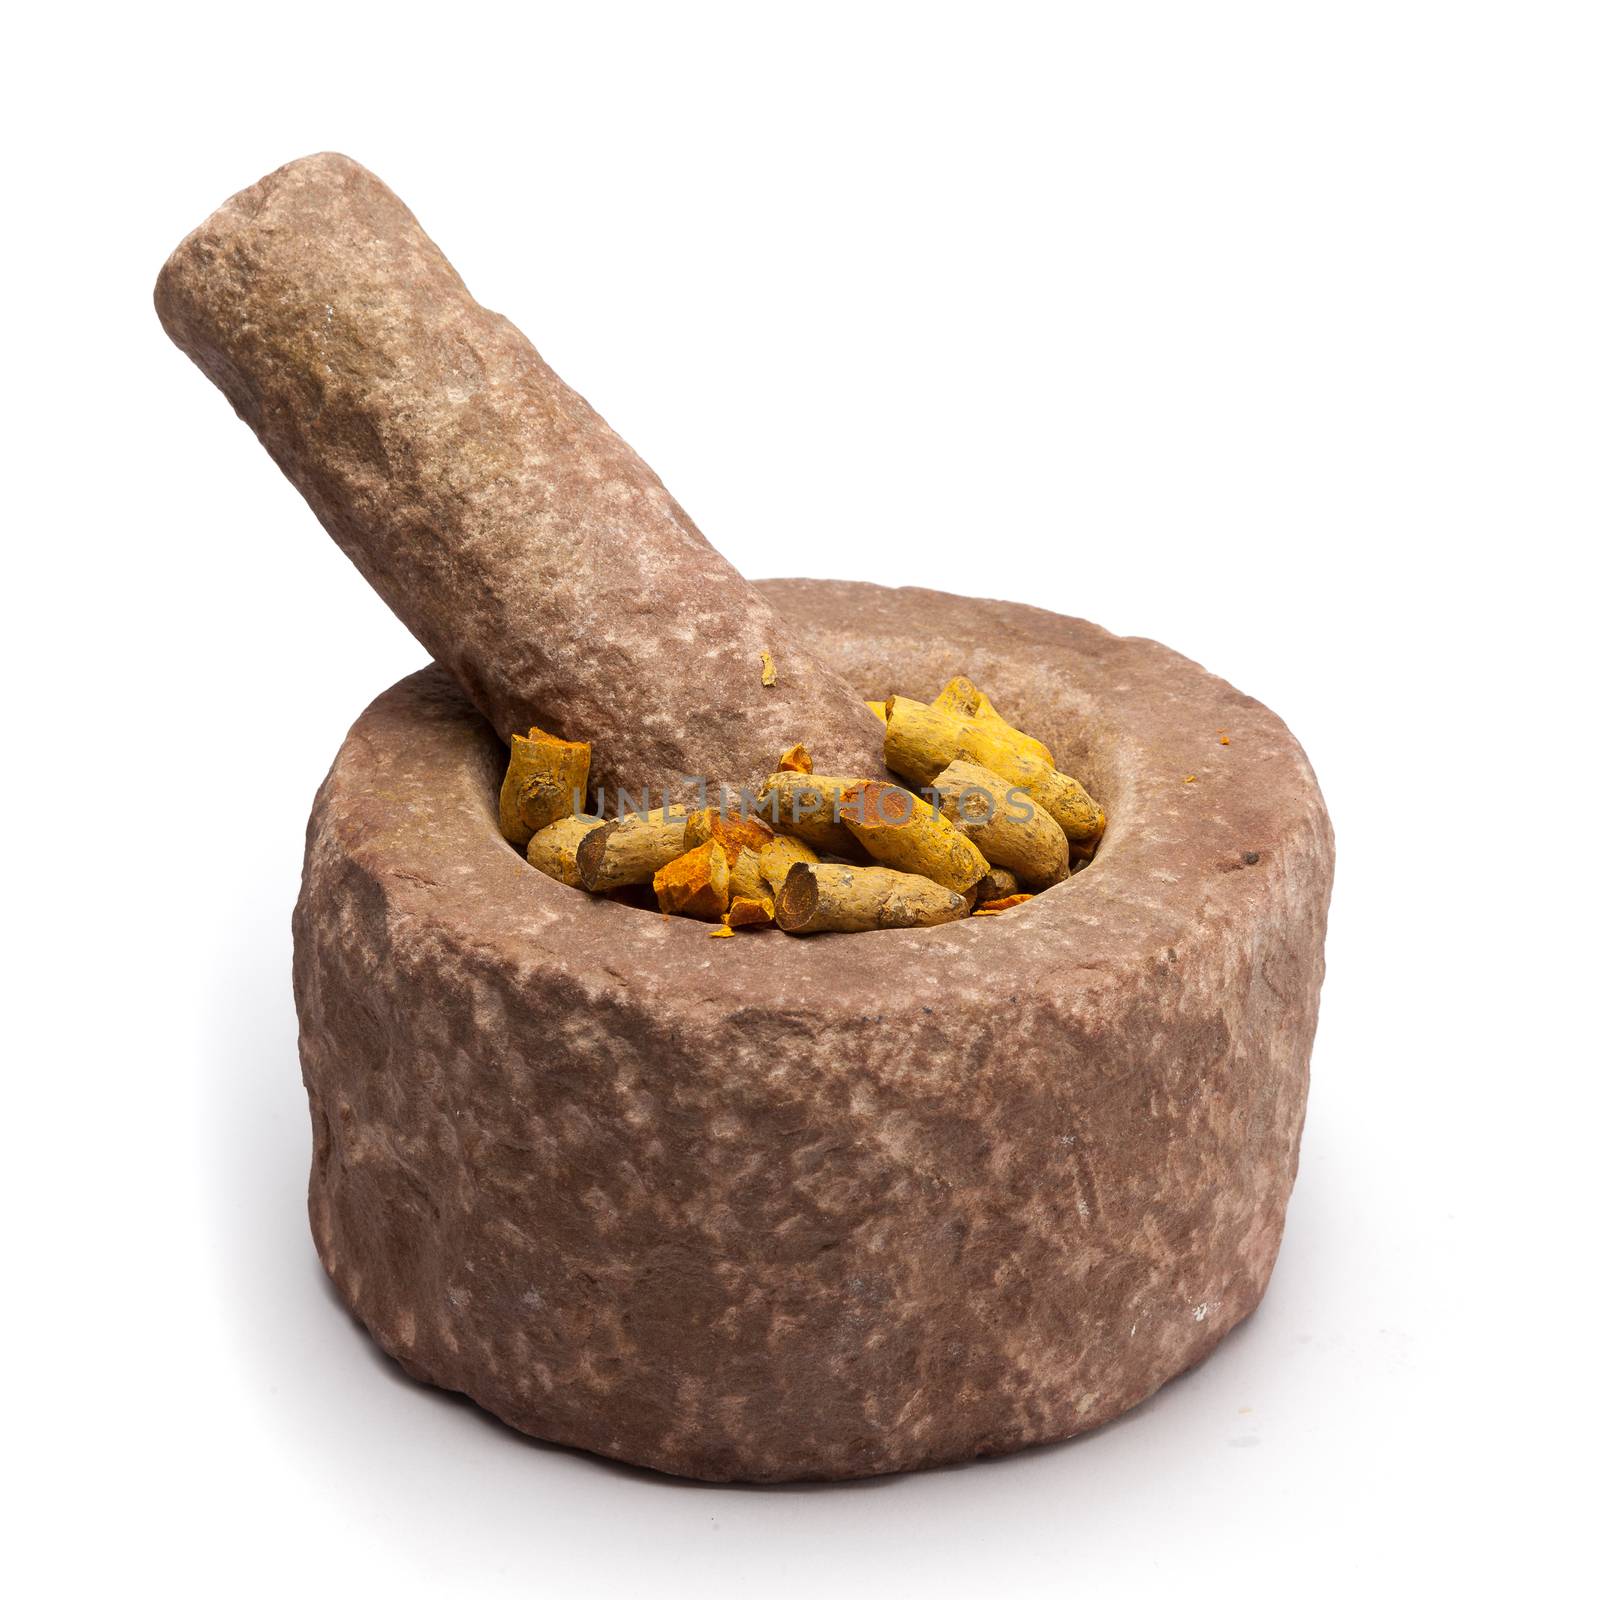 Full and cracked Organic Long Turmeric or Haldi (Curcuma longa) in mortar with pestle, isolated on white background.